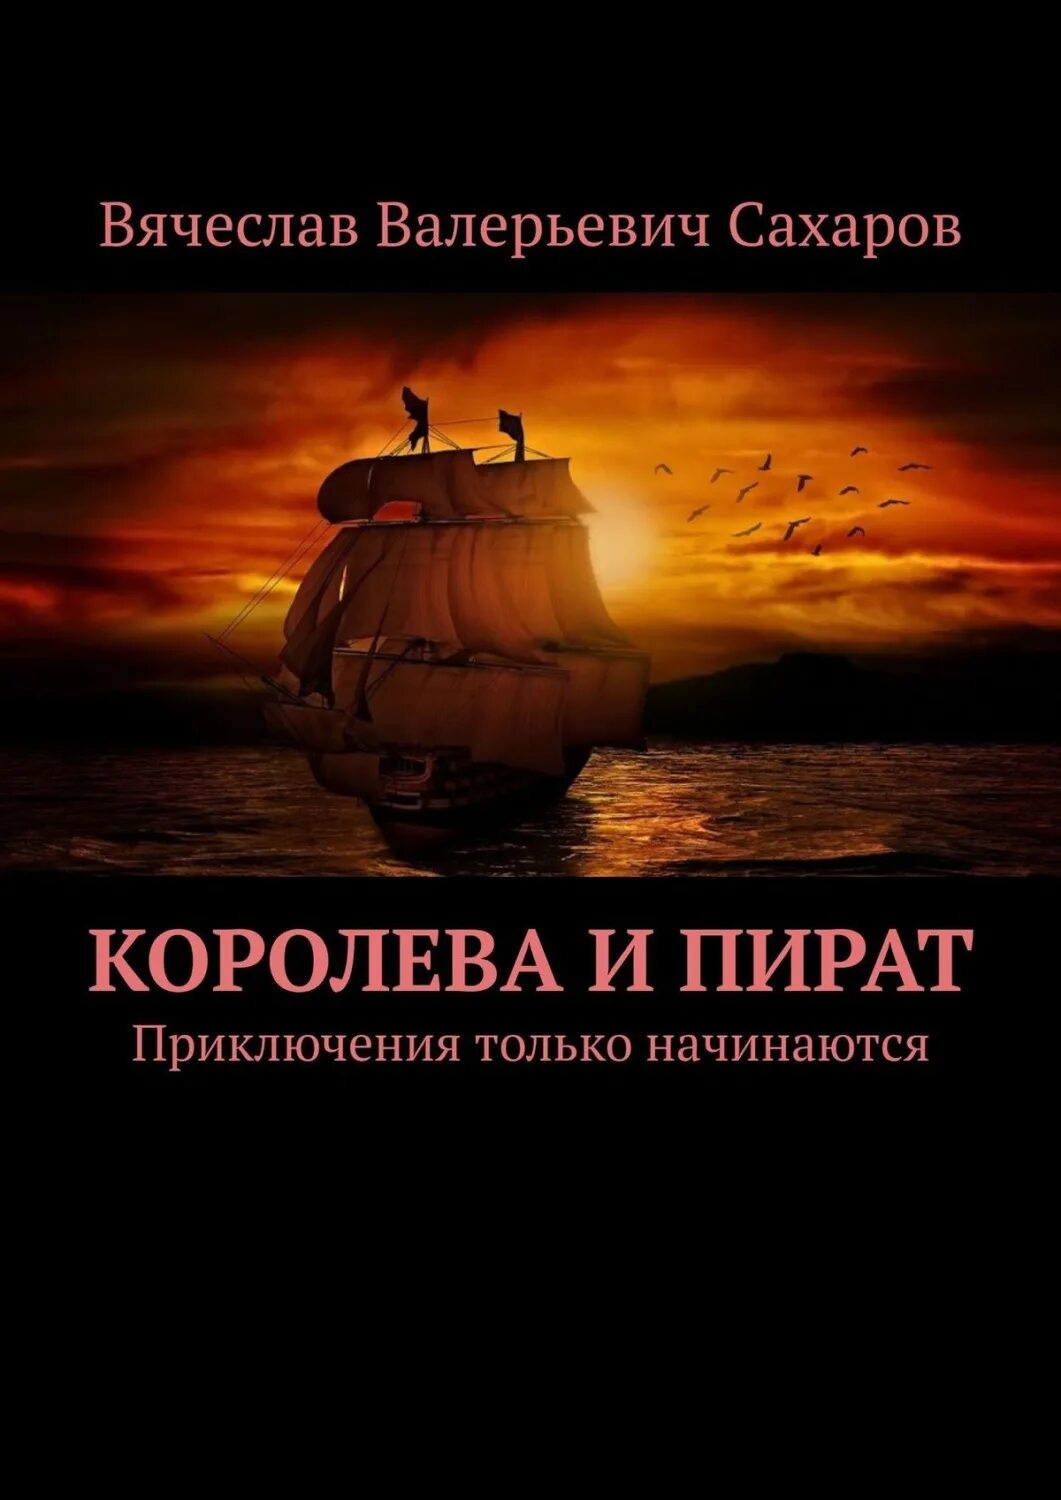 Книги про приключения пиратов. Книги о пиратах и приключениях. Приключения только начинаются.